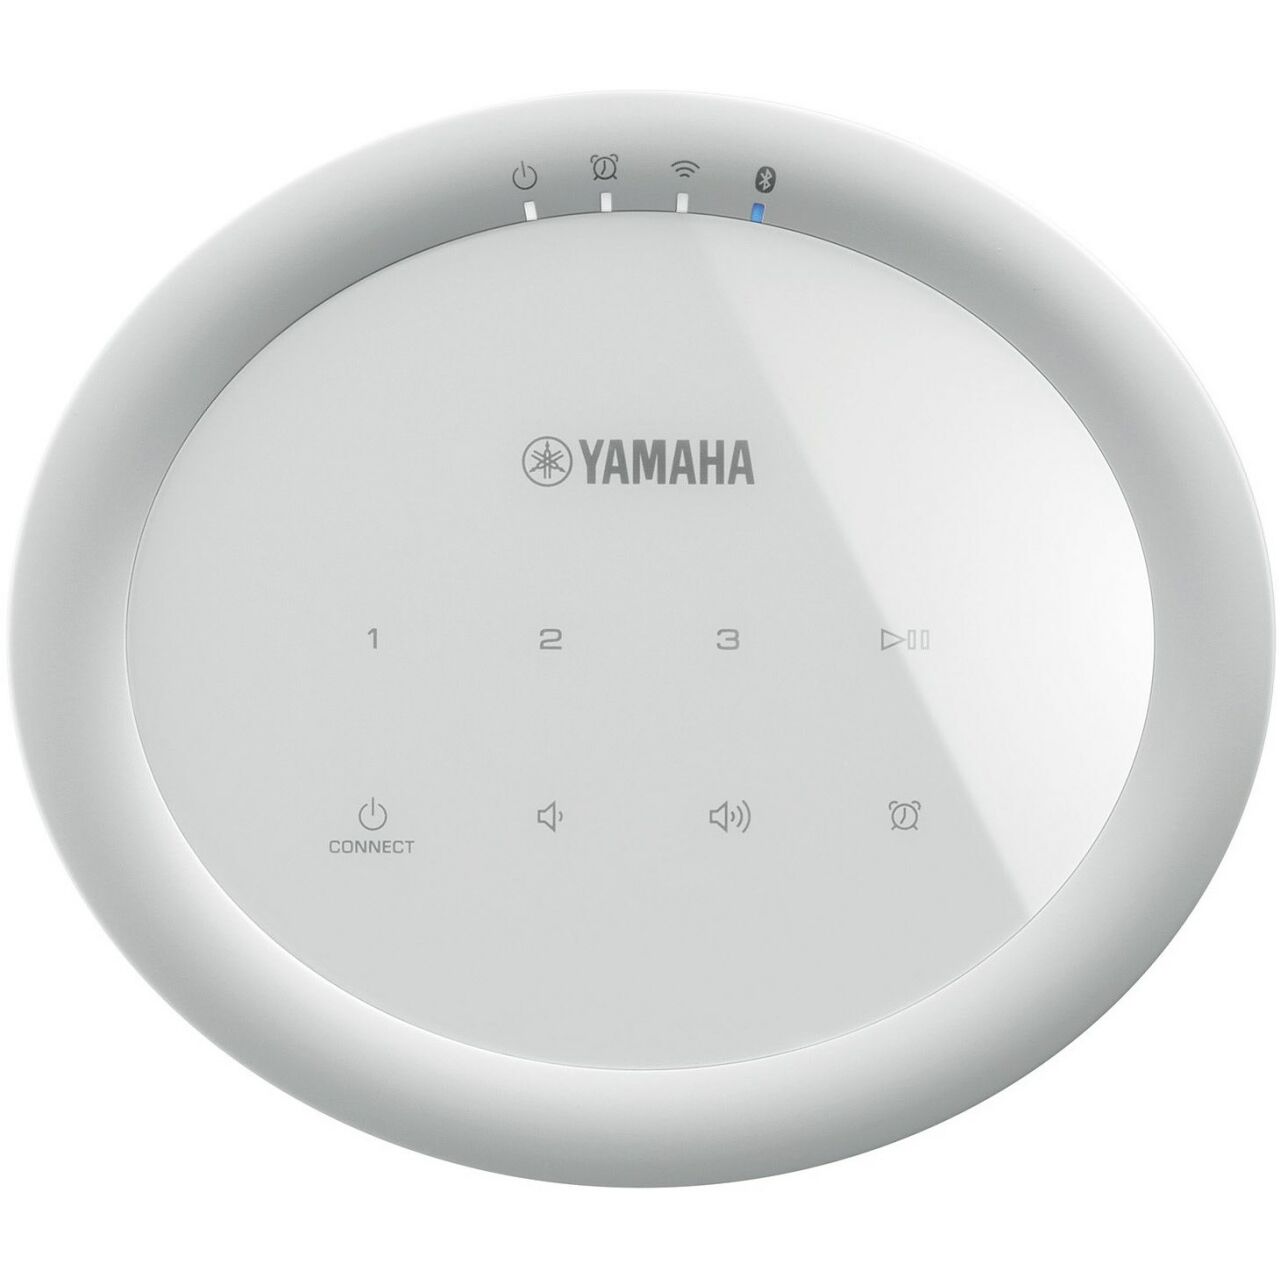 Yamaha MC 20 (Musiccast) WX21